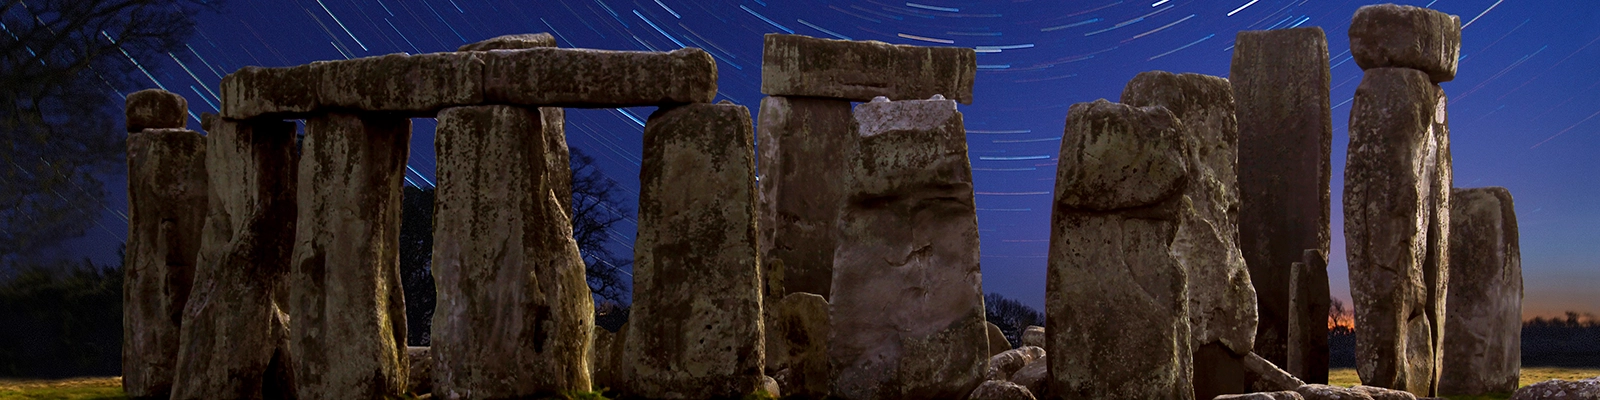 Stonehenge at night with circular star trails.